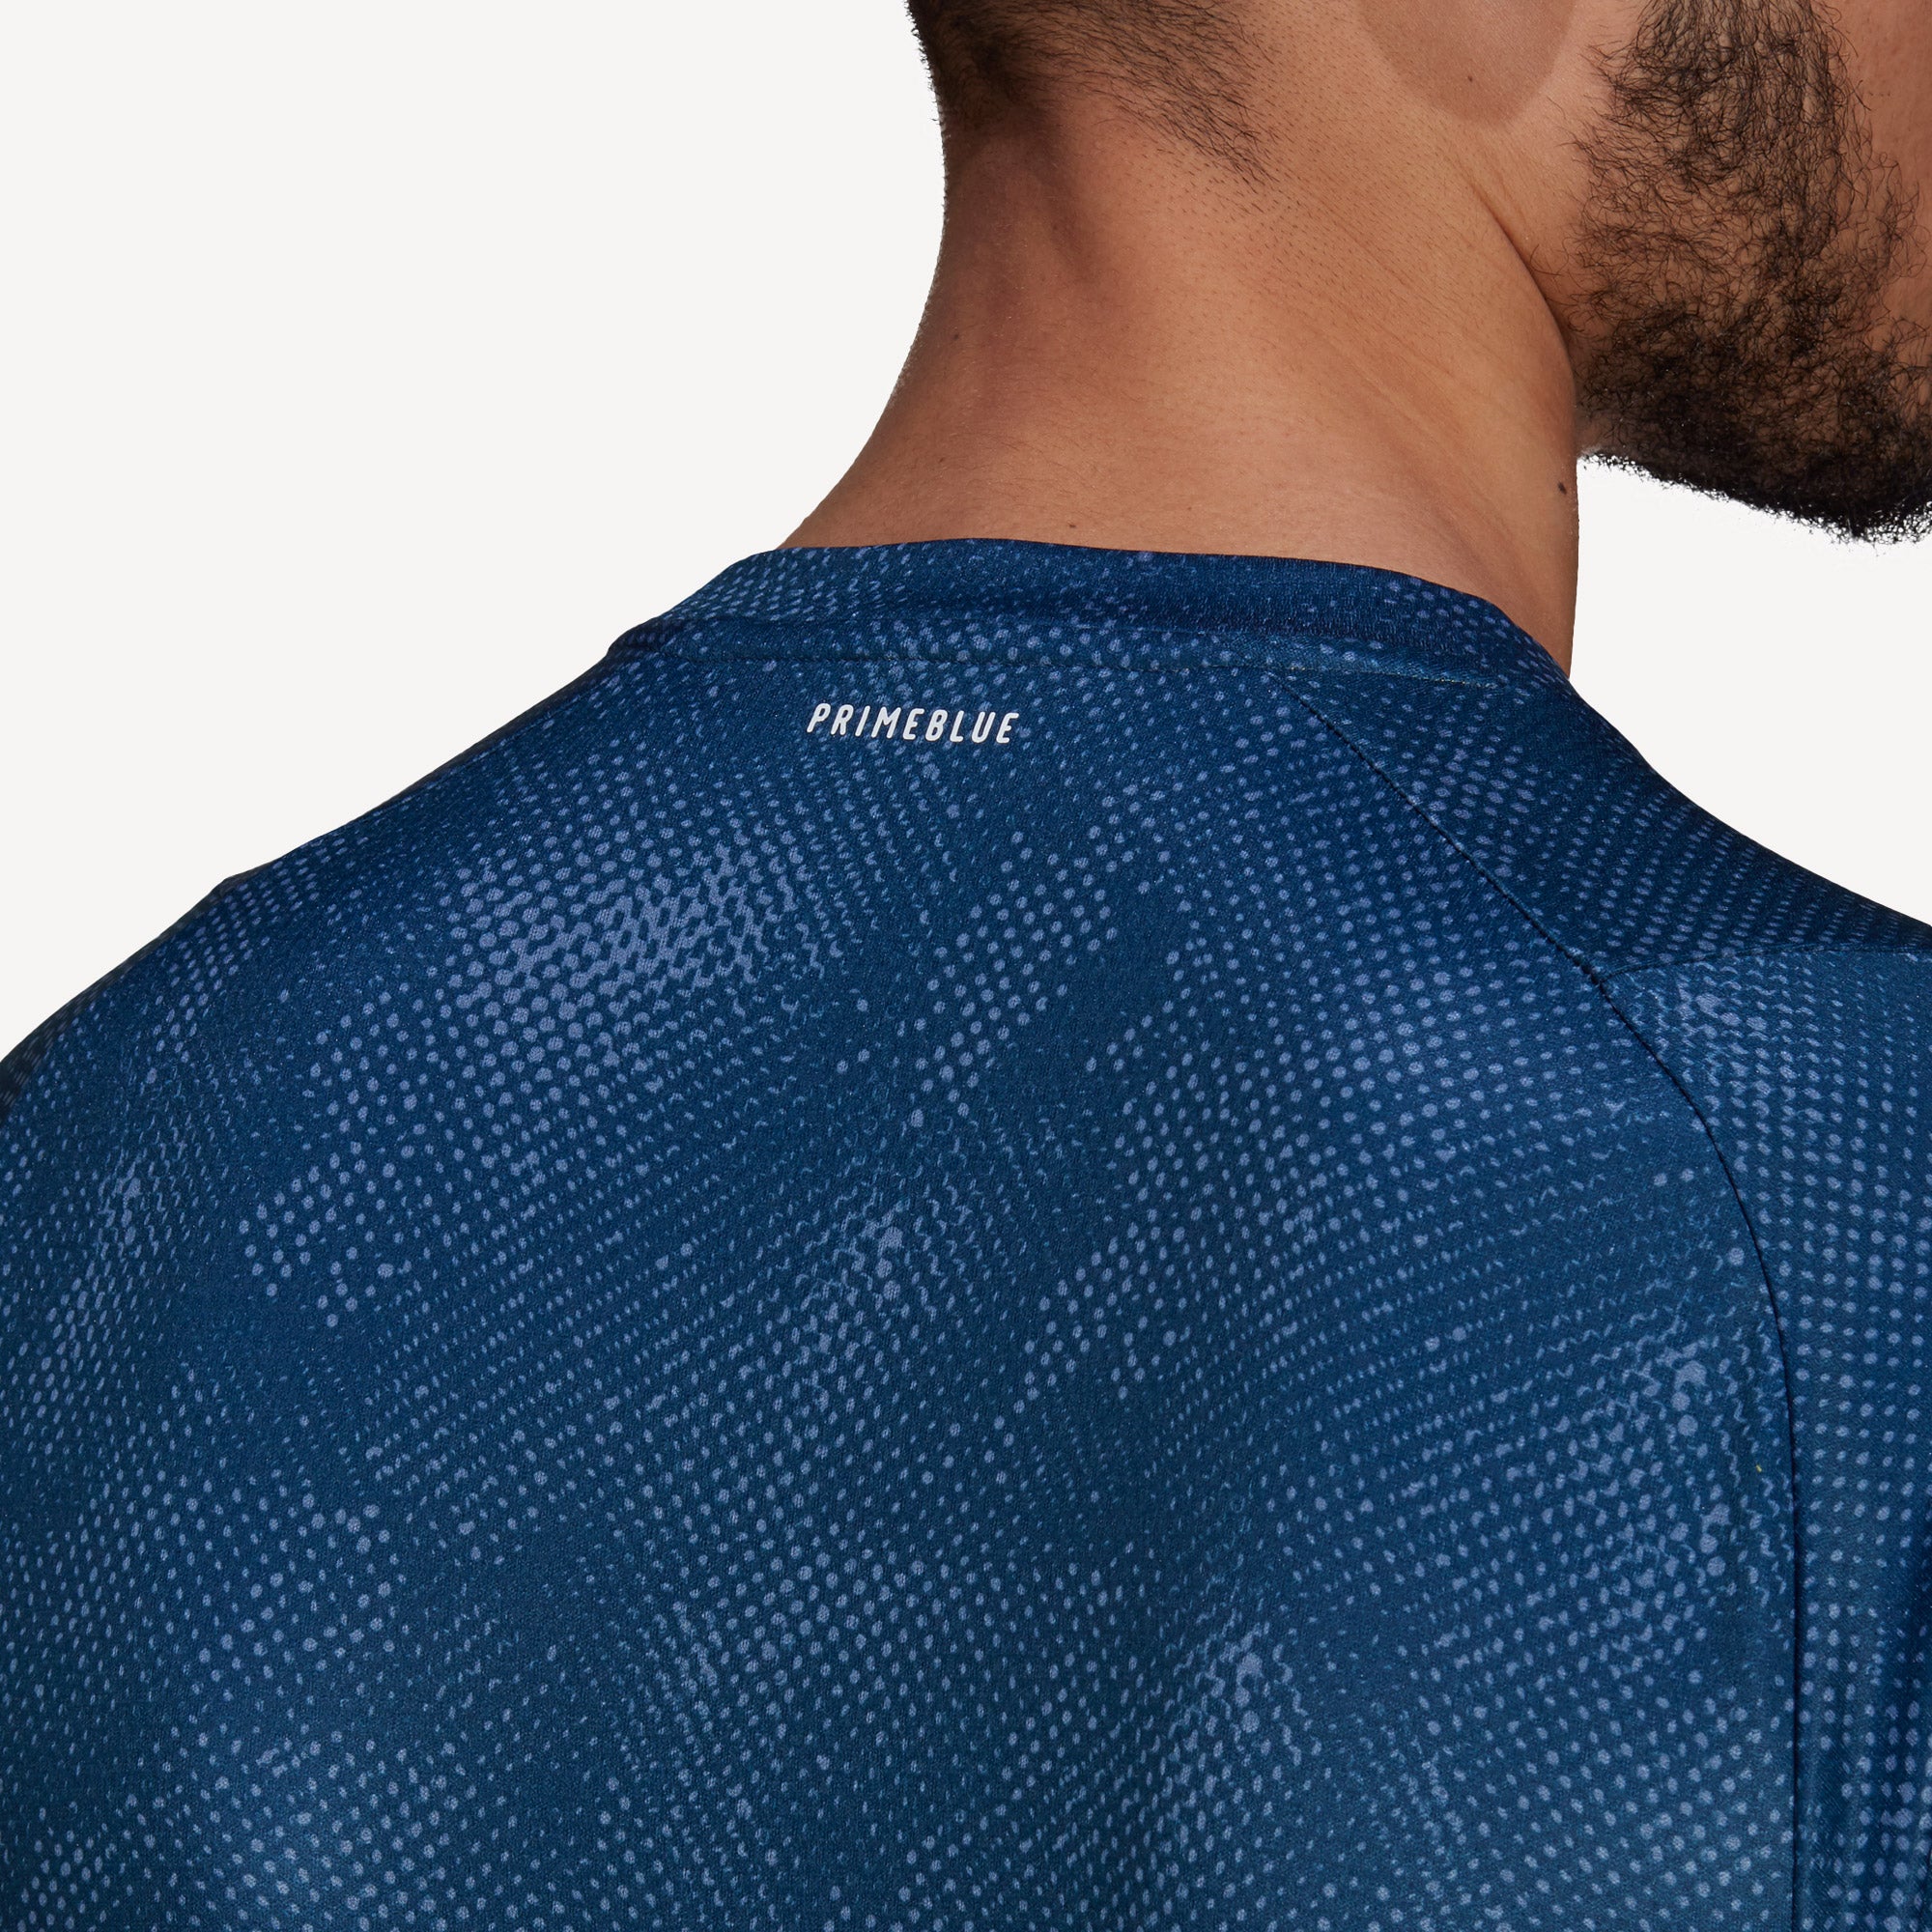 adidas Freelift Primeblue Men's Printed Tennis Shirt Blue (5)